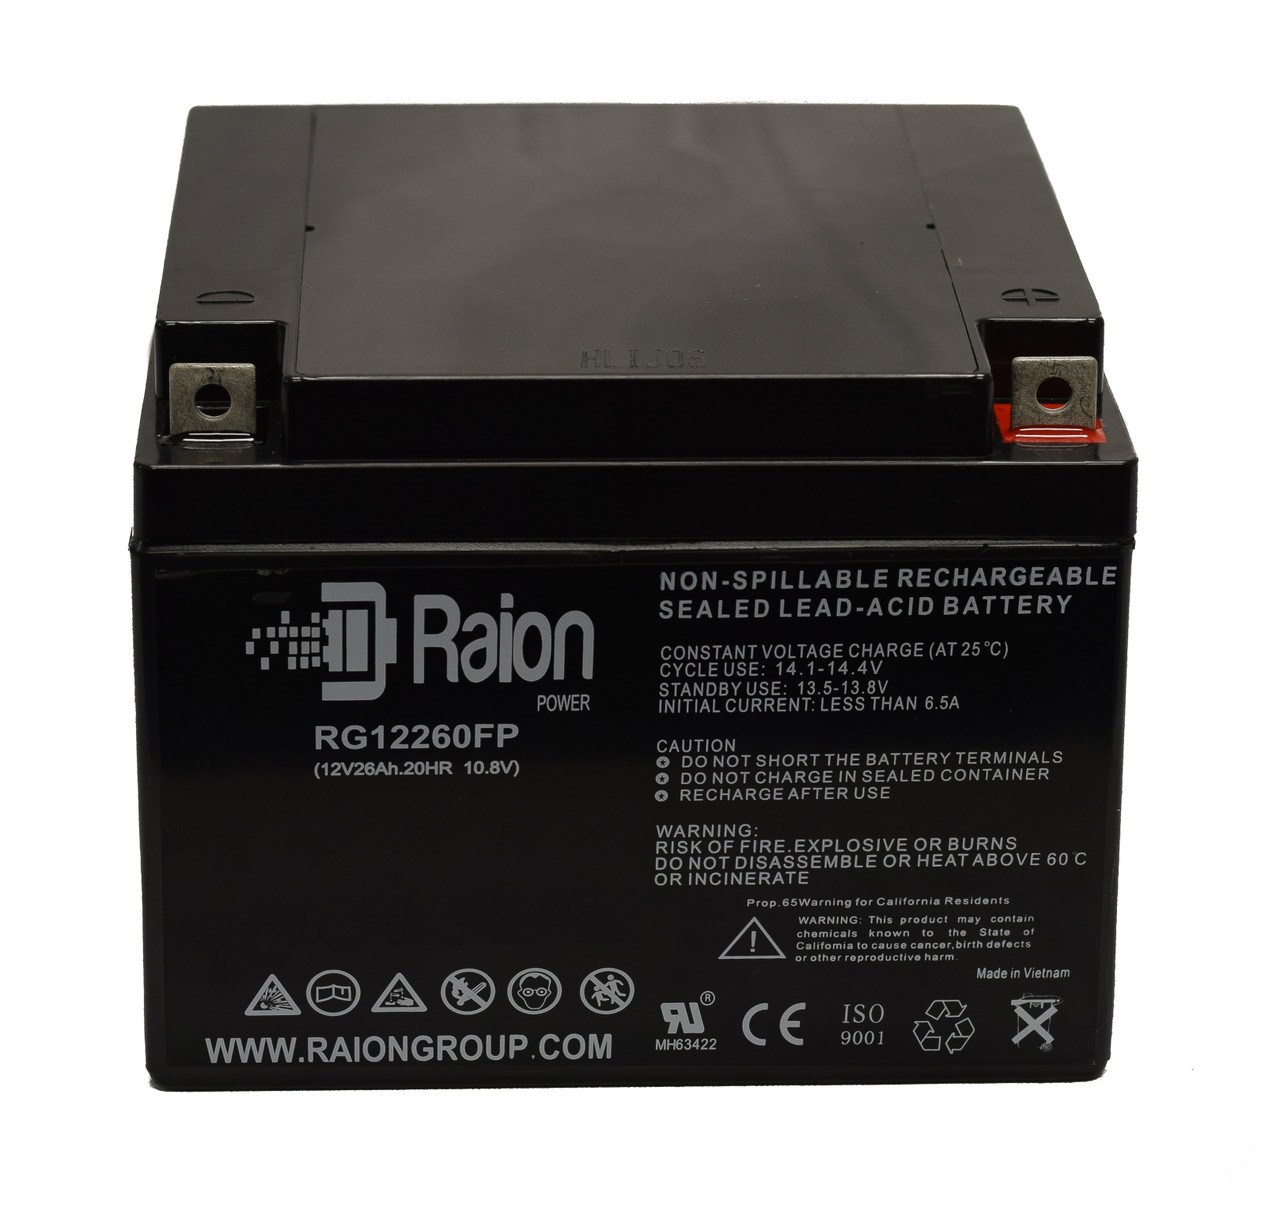 Raion Power RG12260FP 12V 26Ah Lead Acid Battery for Sealake FM12240